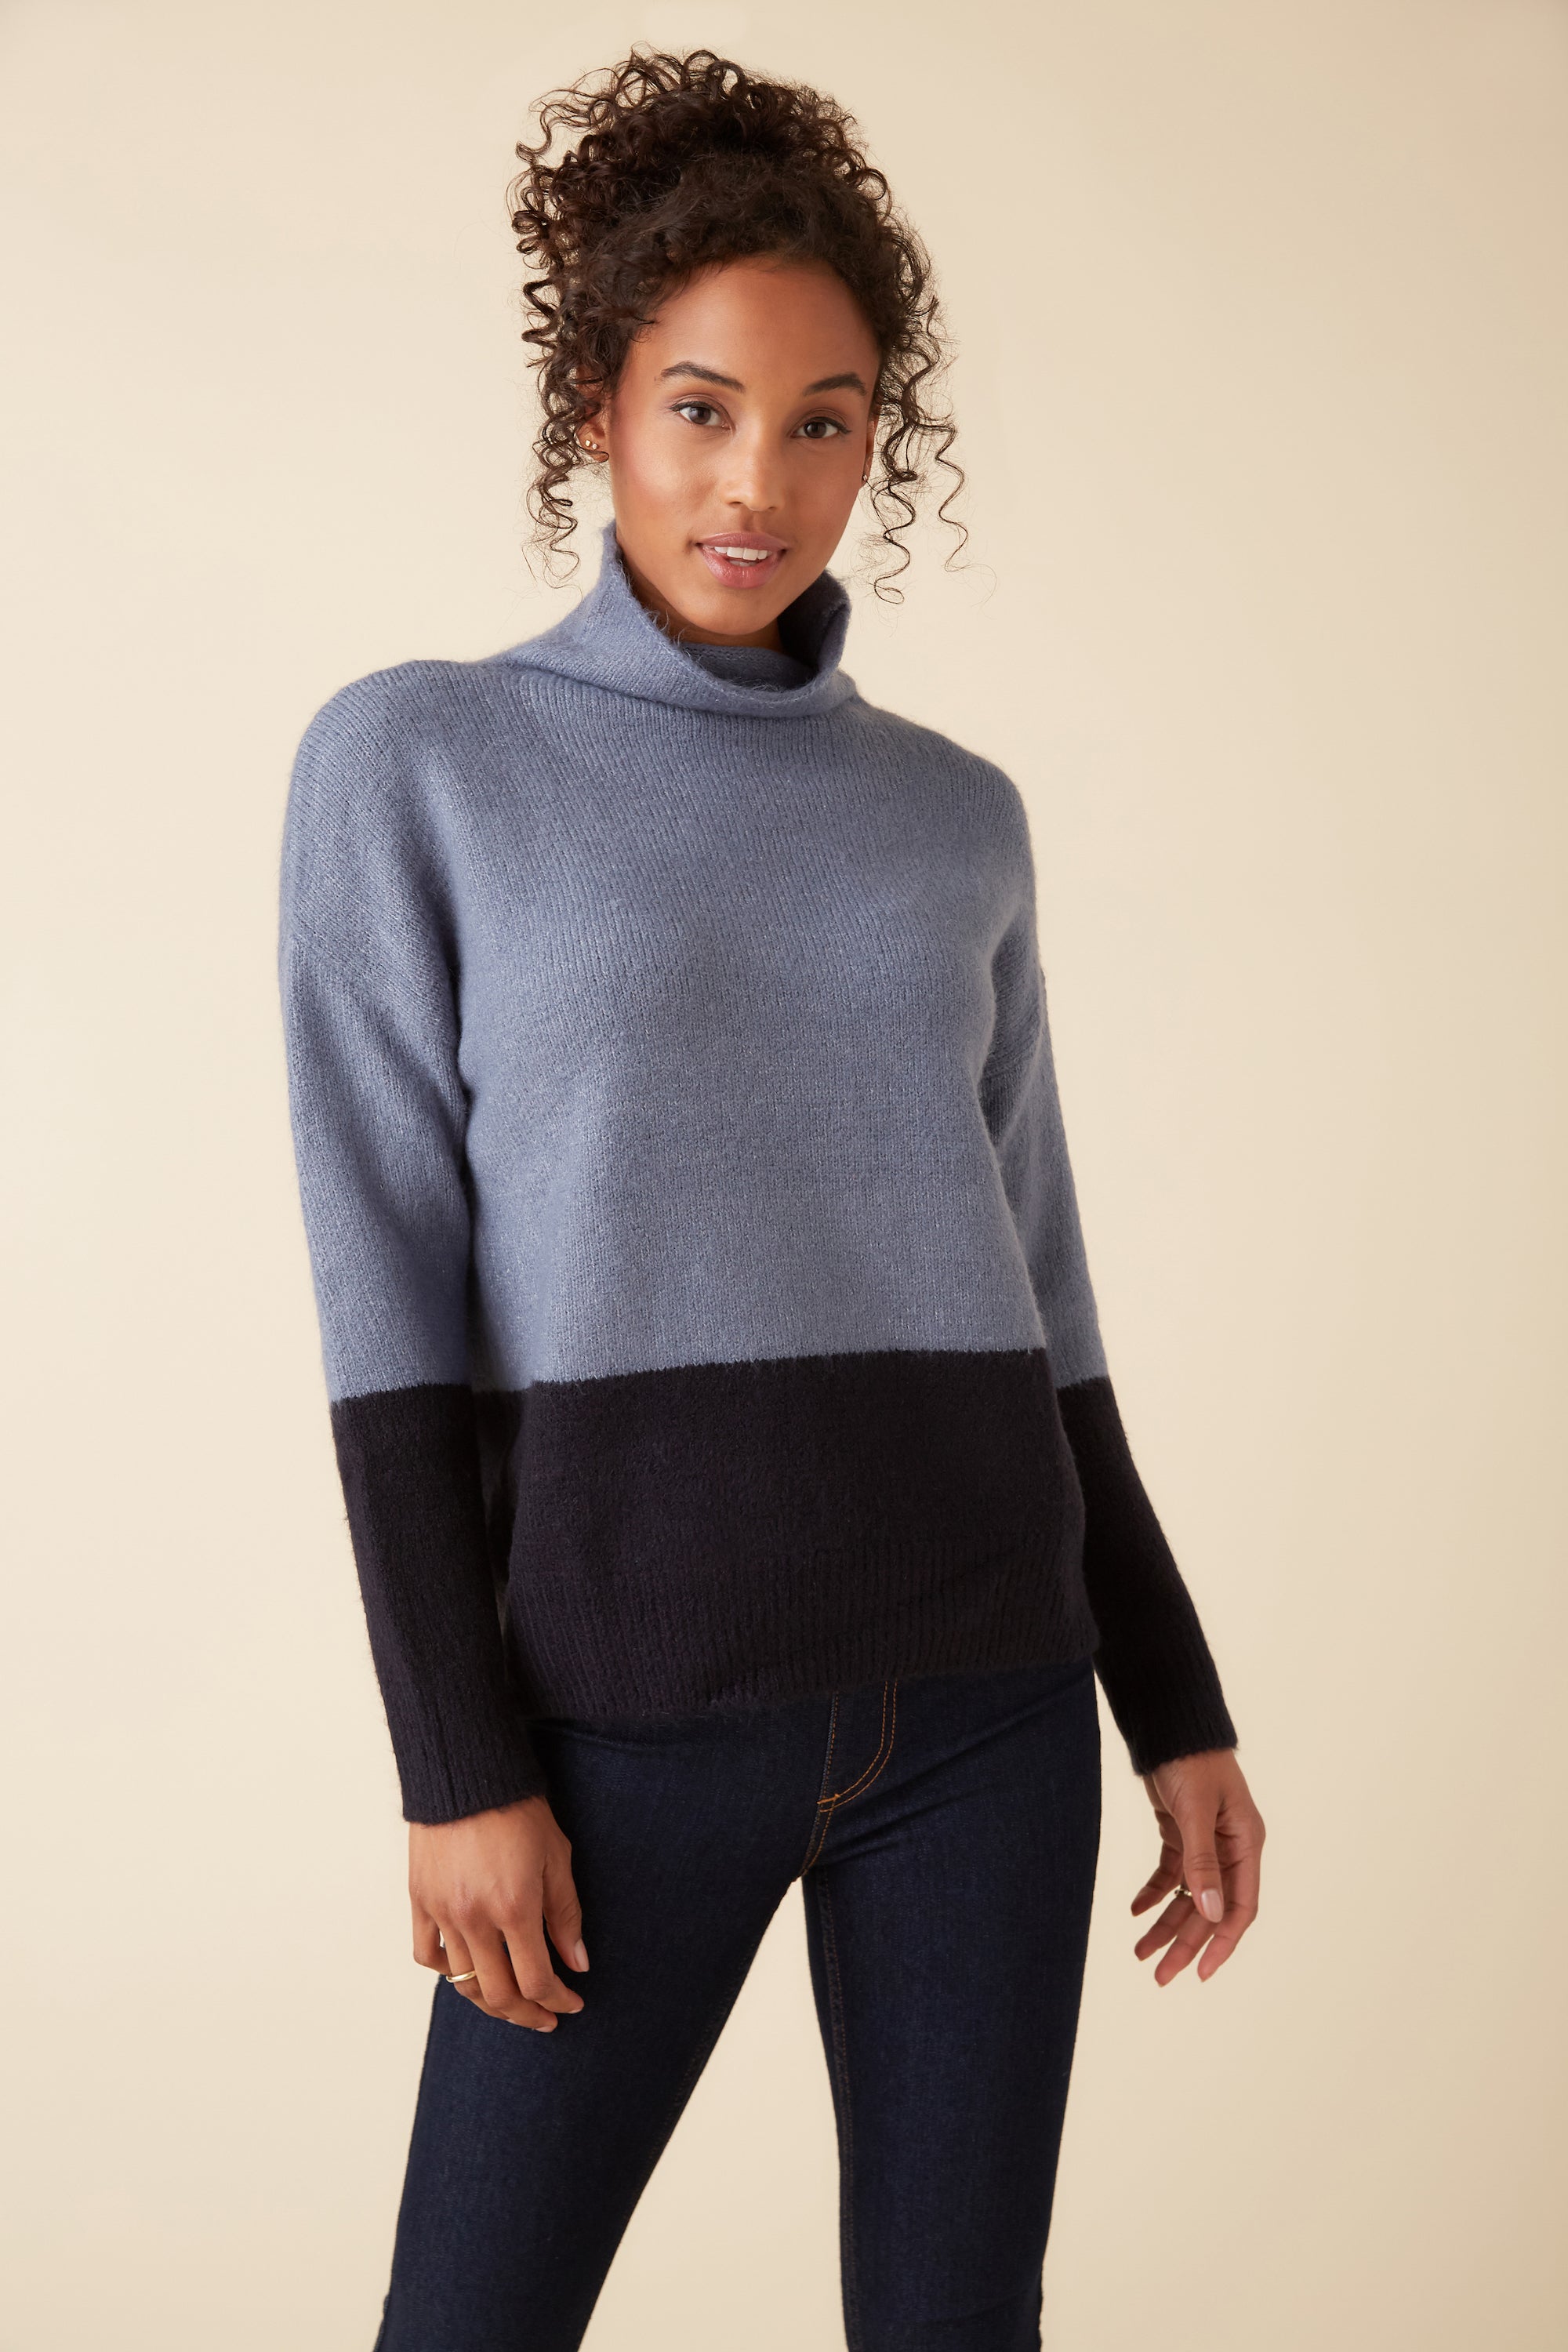 Key Differences Between a Sweater vs Sweatshirt | Karen Kane